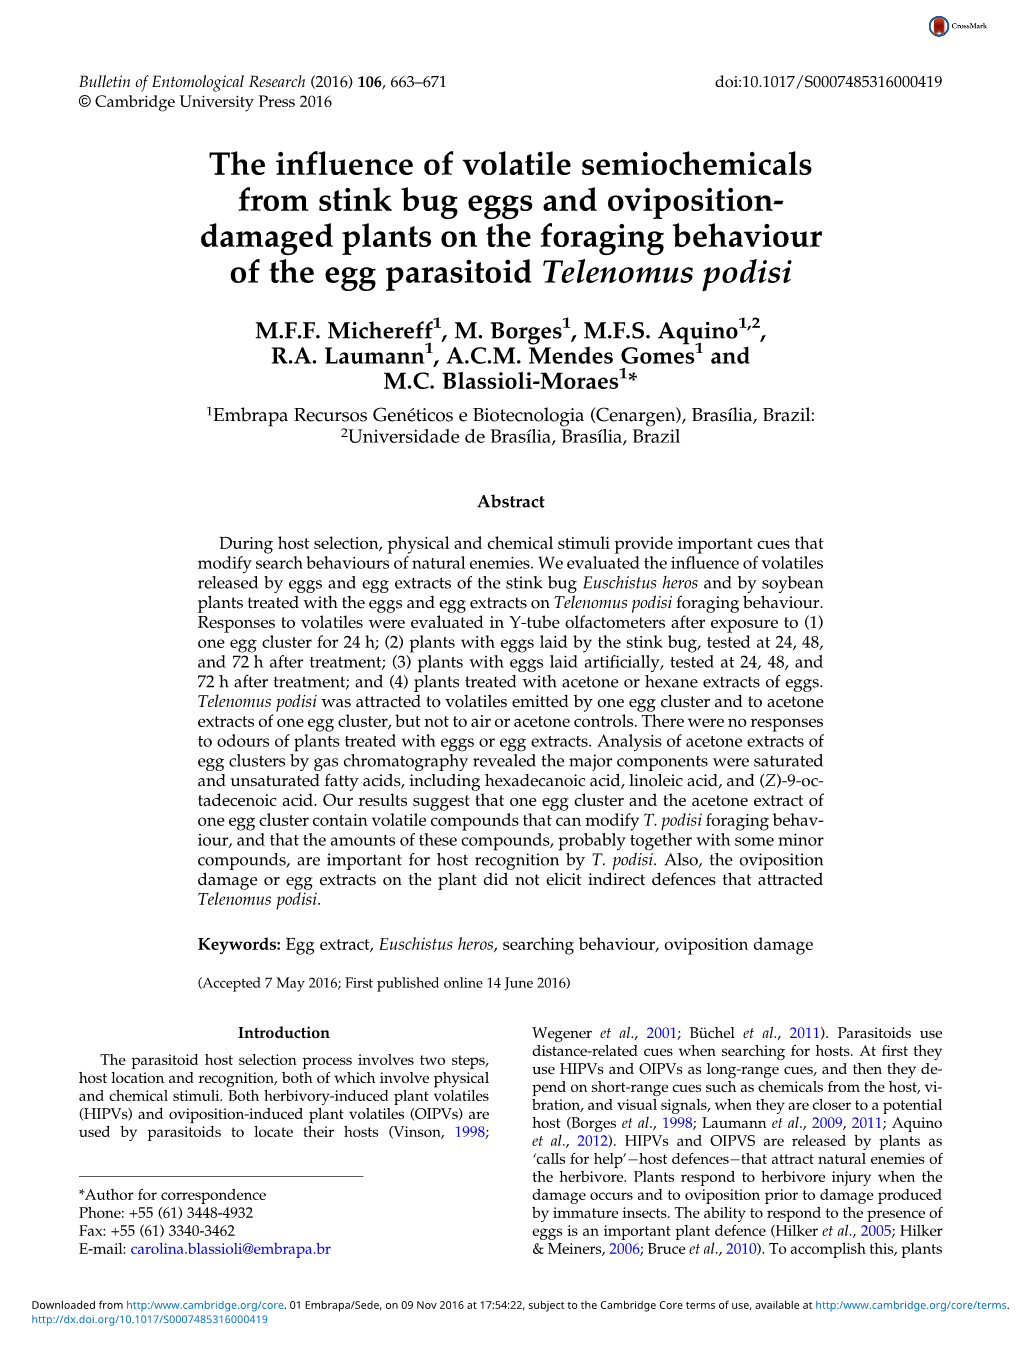 Damaged Plants on the Foraging Behaviour of the Egg Parasitoid Telenomus Podisi